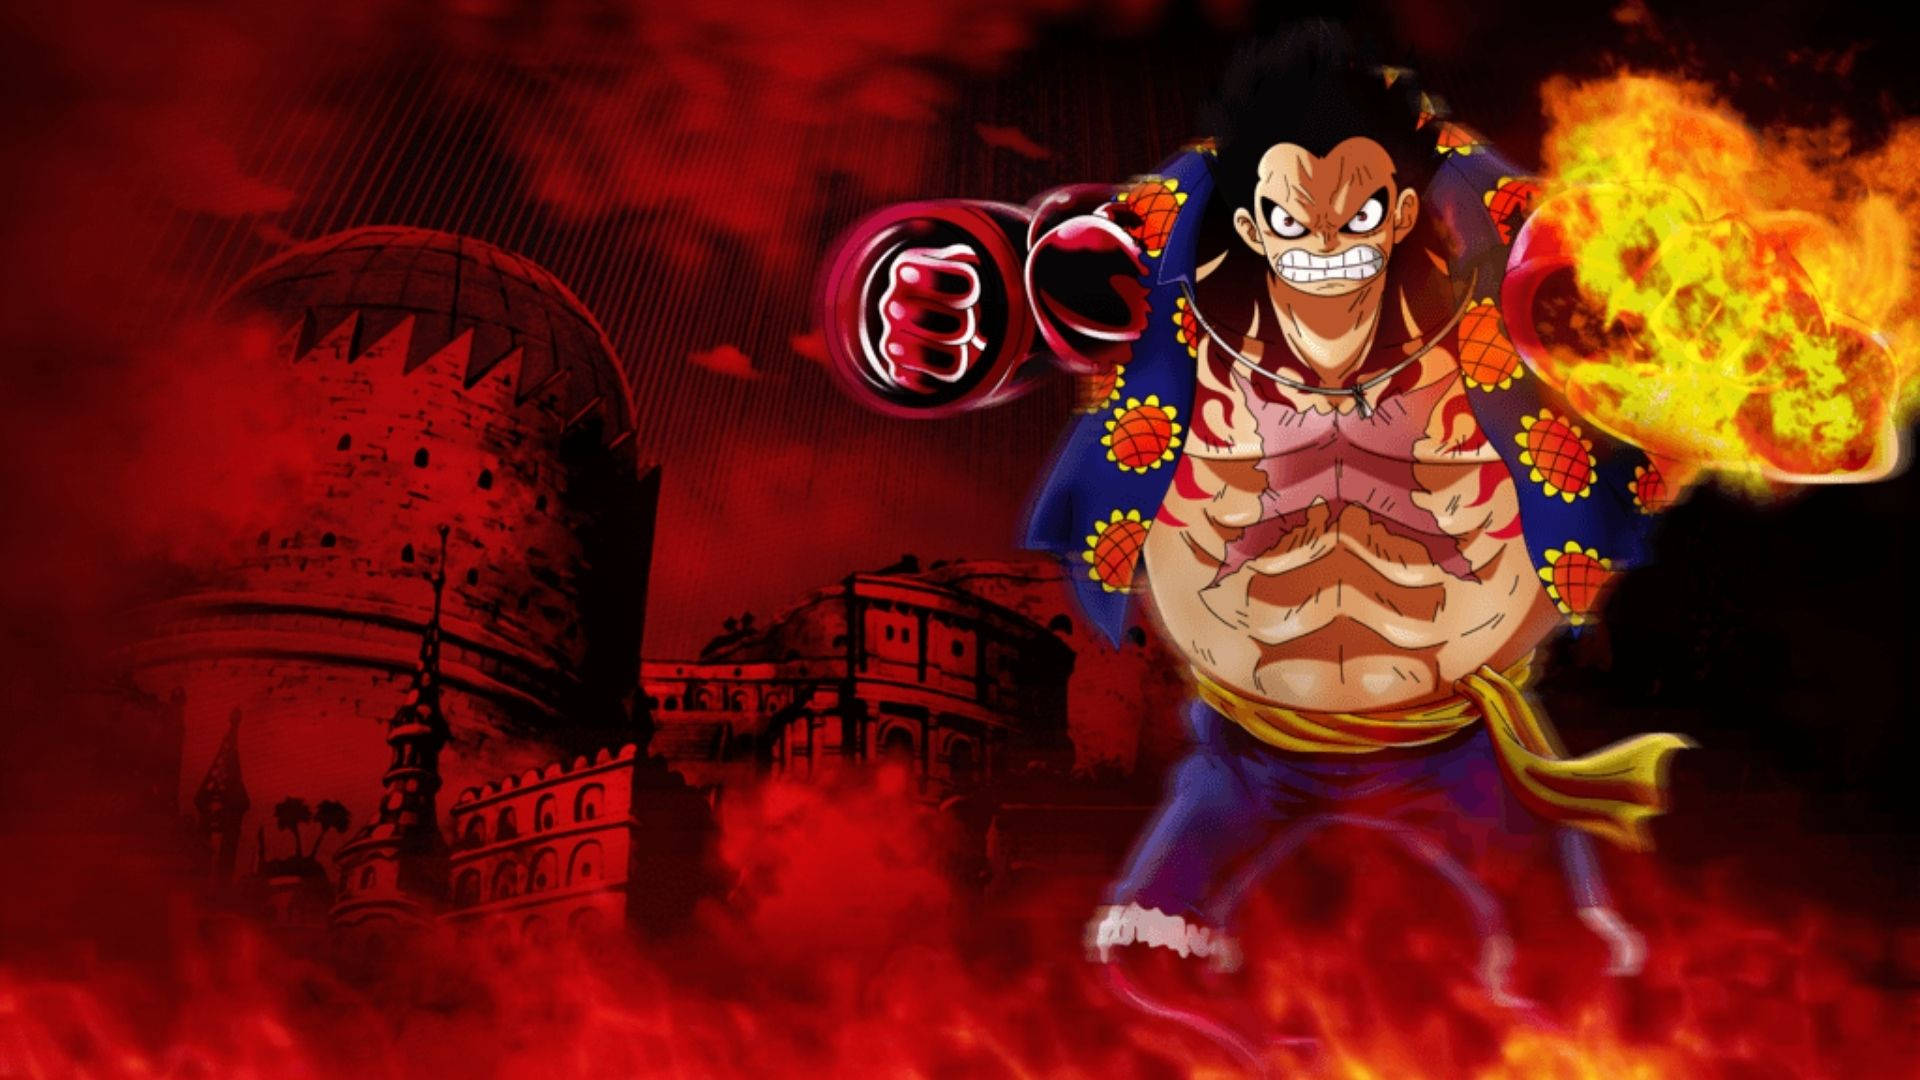 Luffy Gear 4 Burning Castle Background